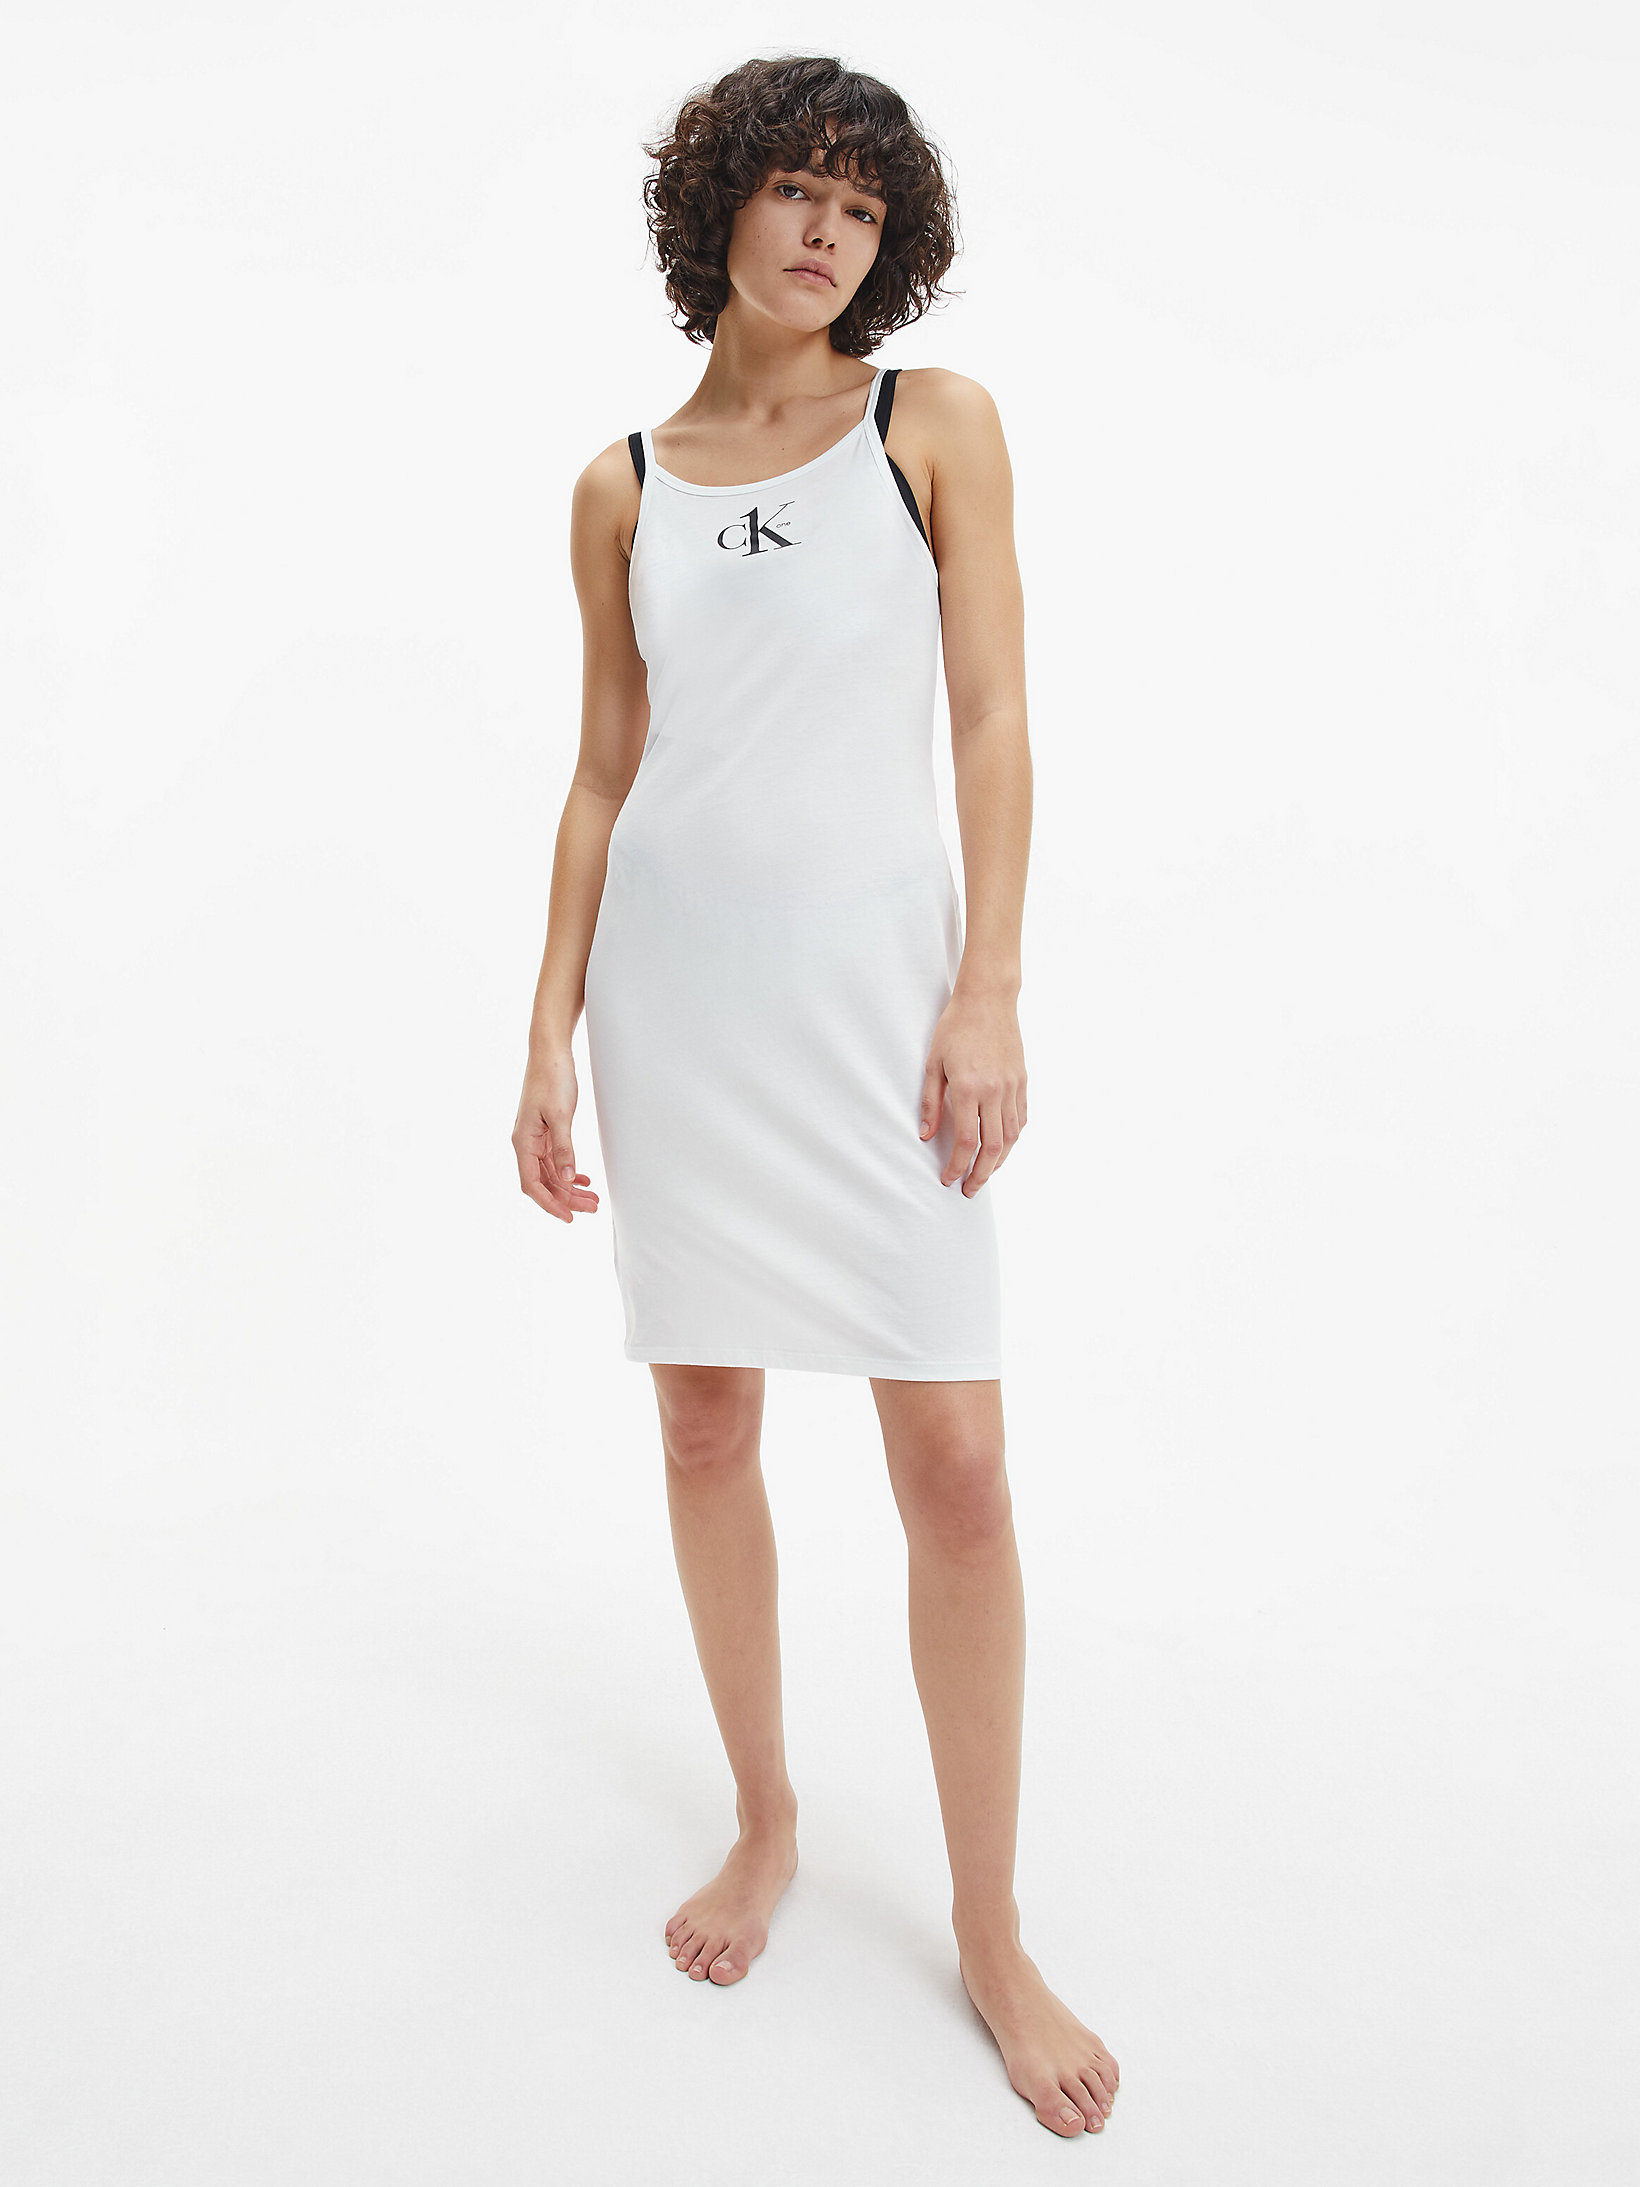 Pvh Classic White > Пляжное платье из органического хлопка - CK One > undefined Женщины - Calvin Klein